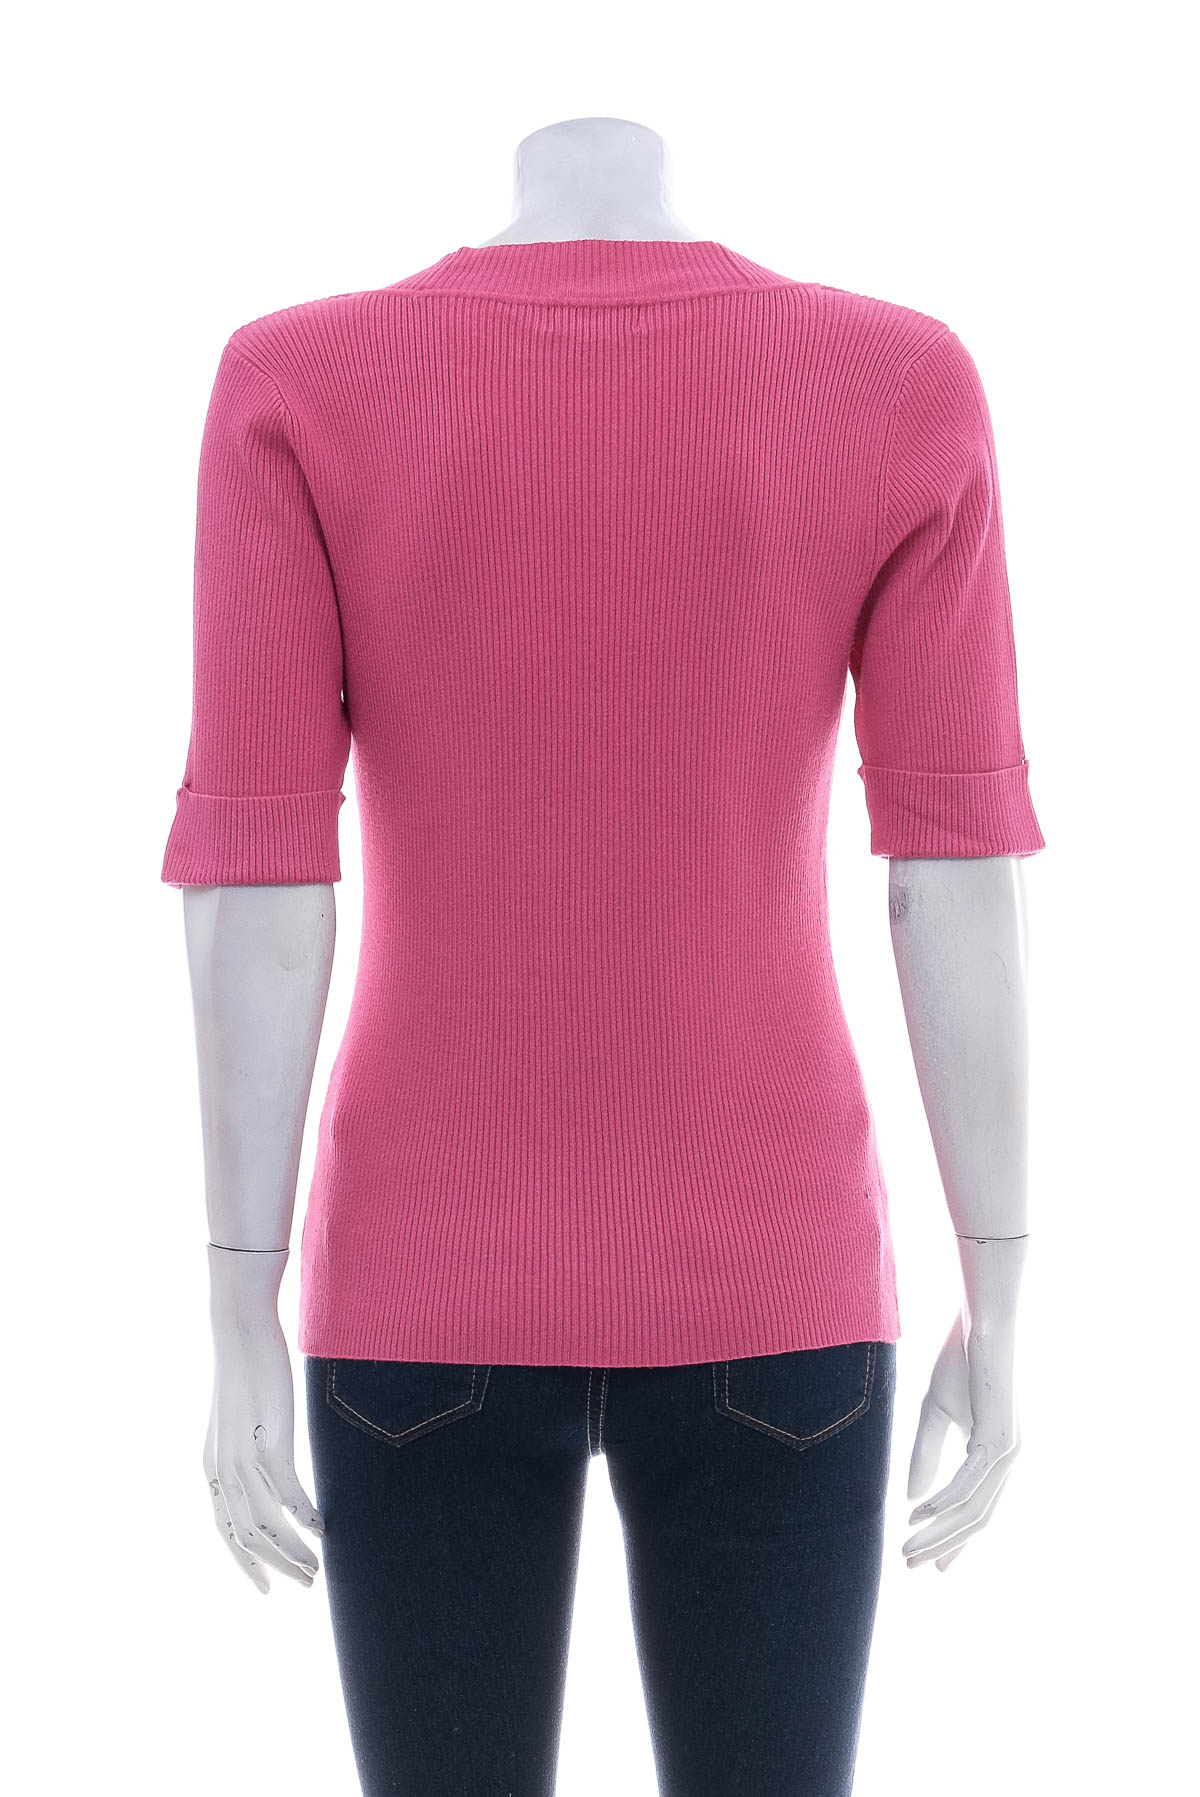 Women's sweater - Dalia - 1